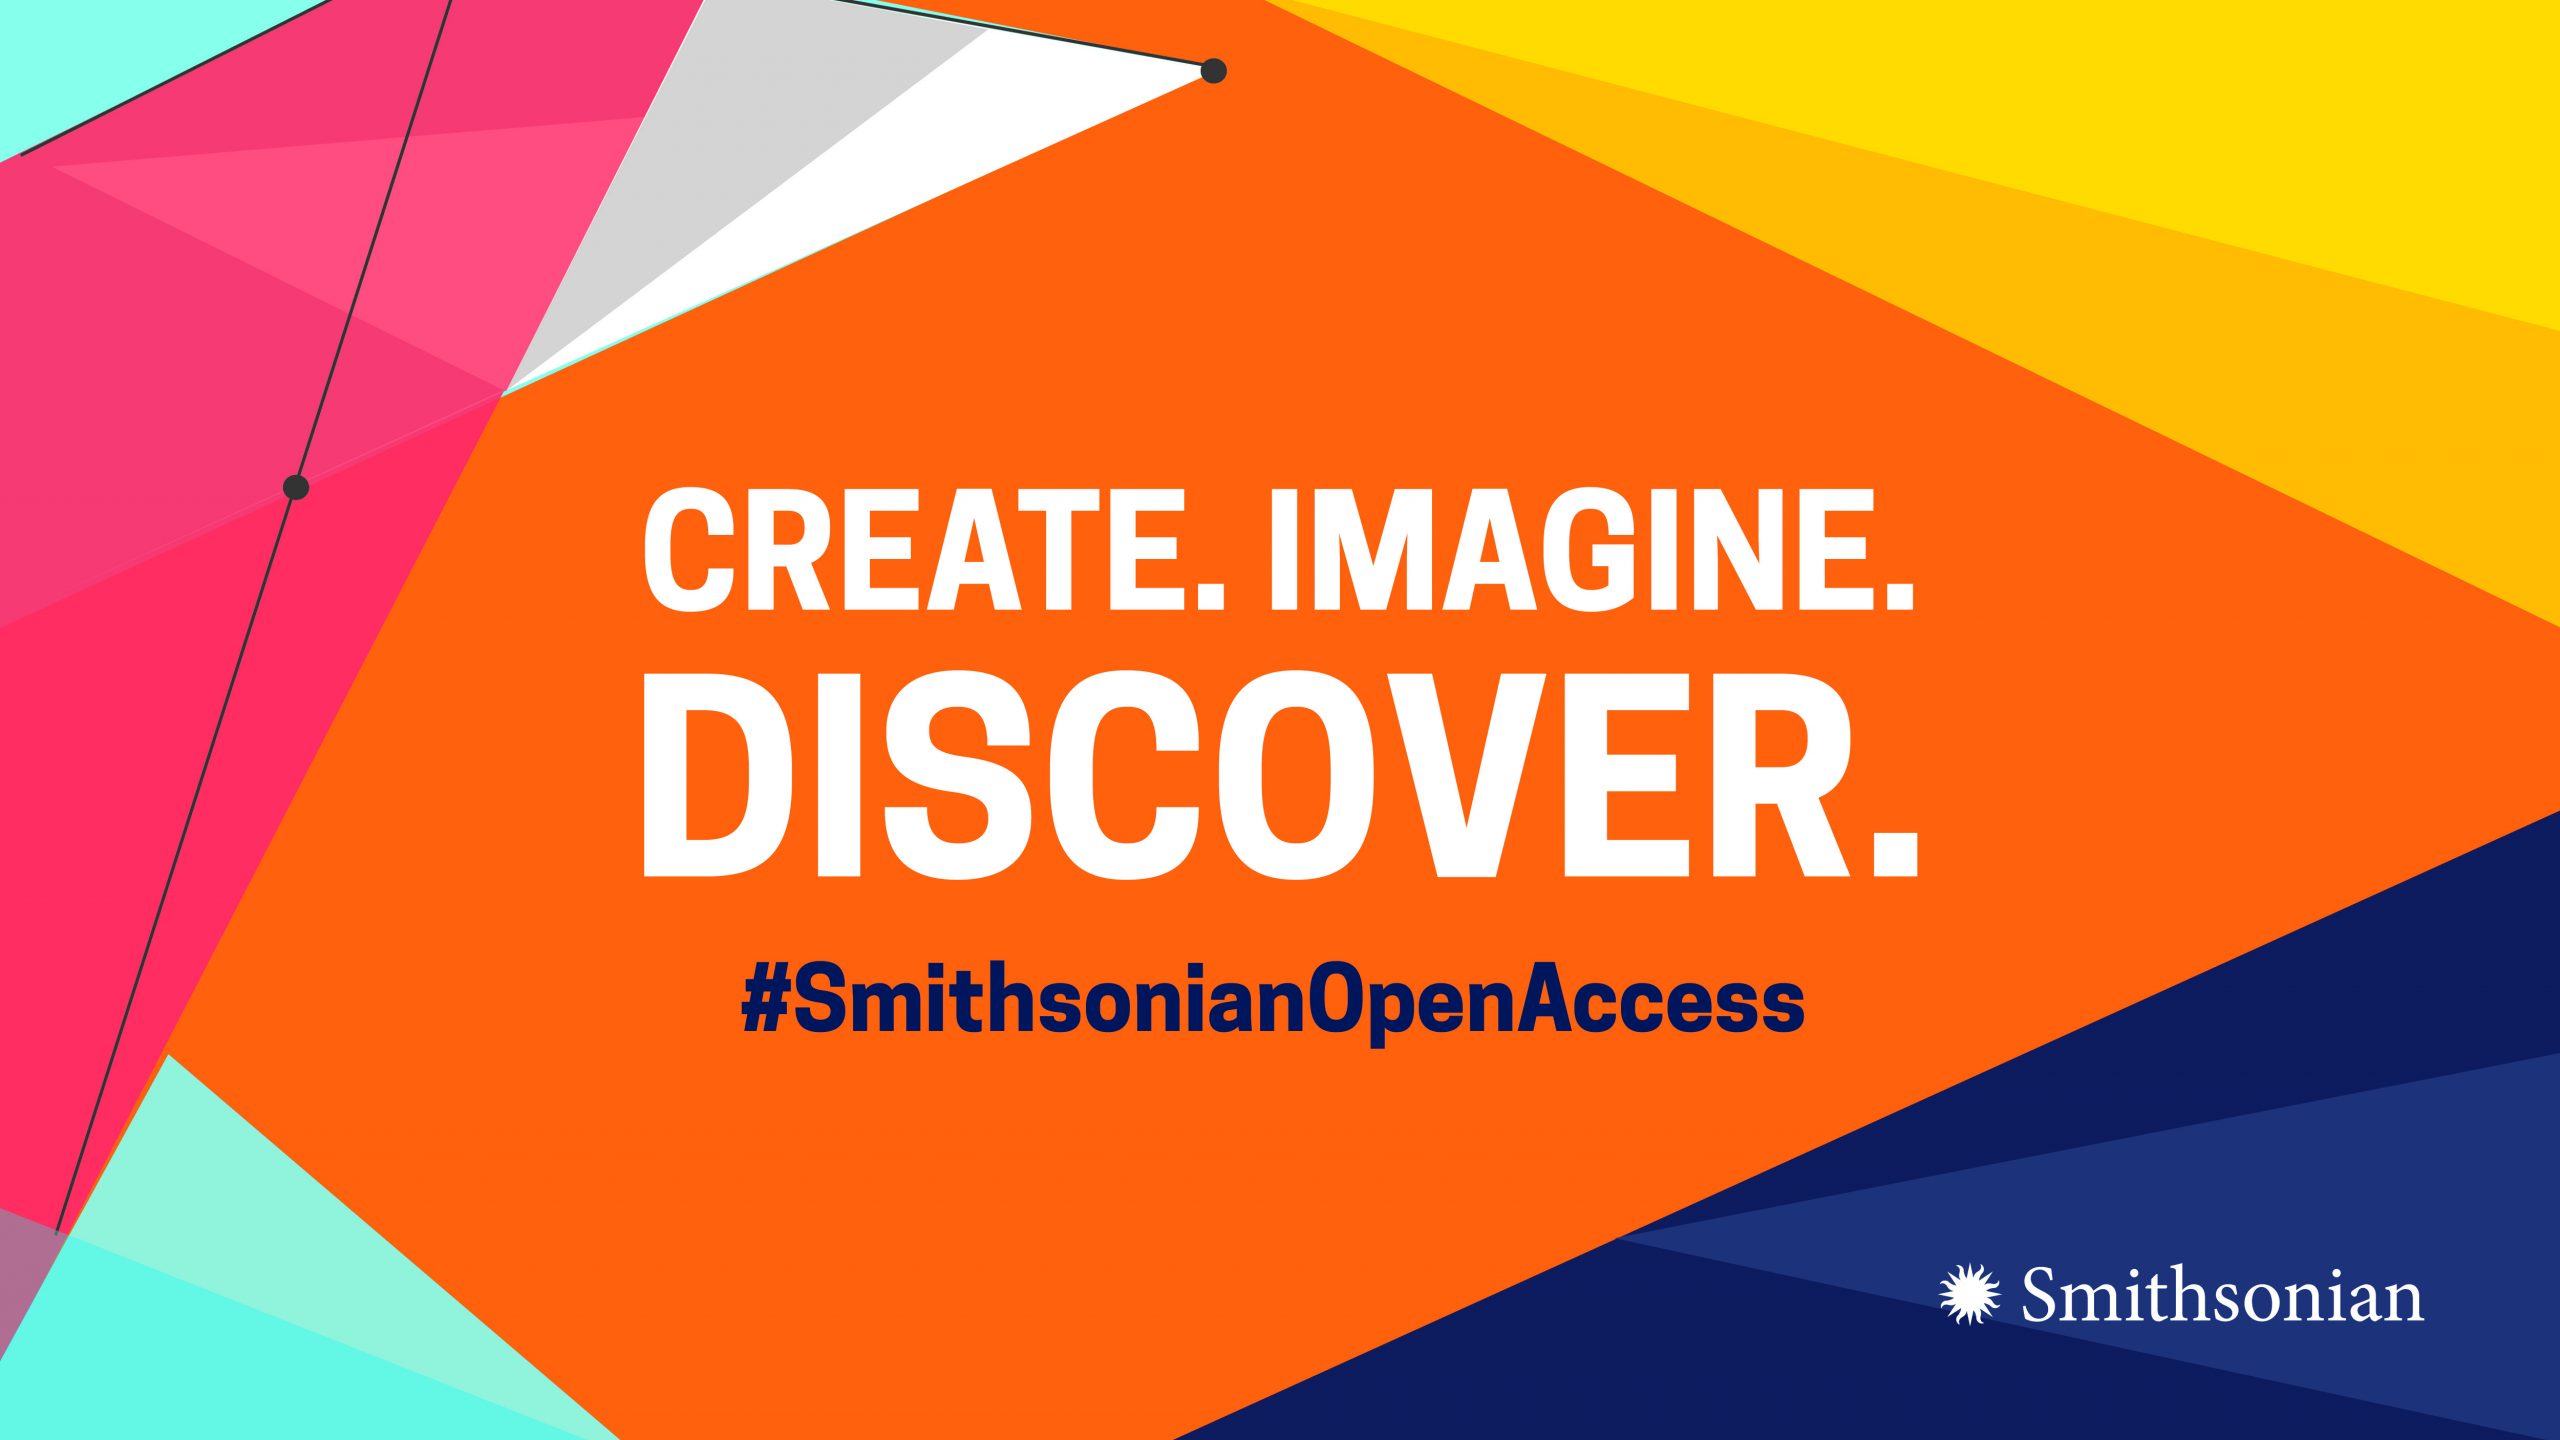 Smithsonian Open Access , HD Wallpaper & Backgrounds